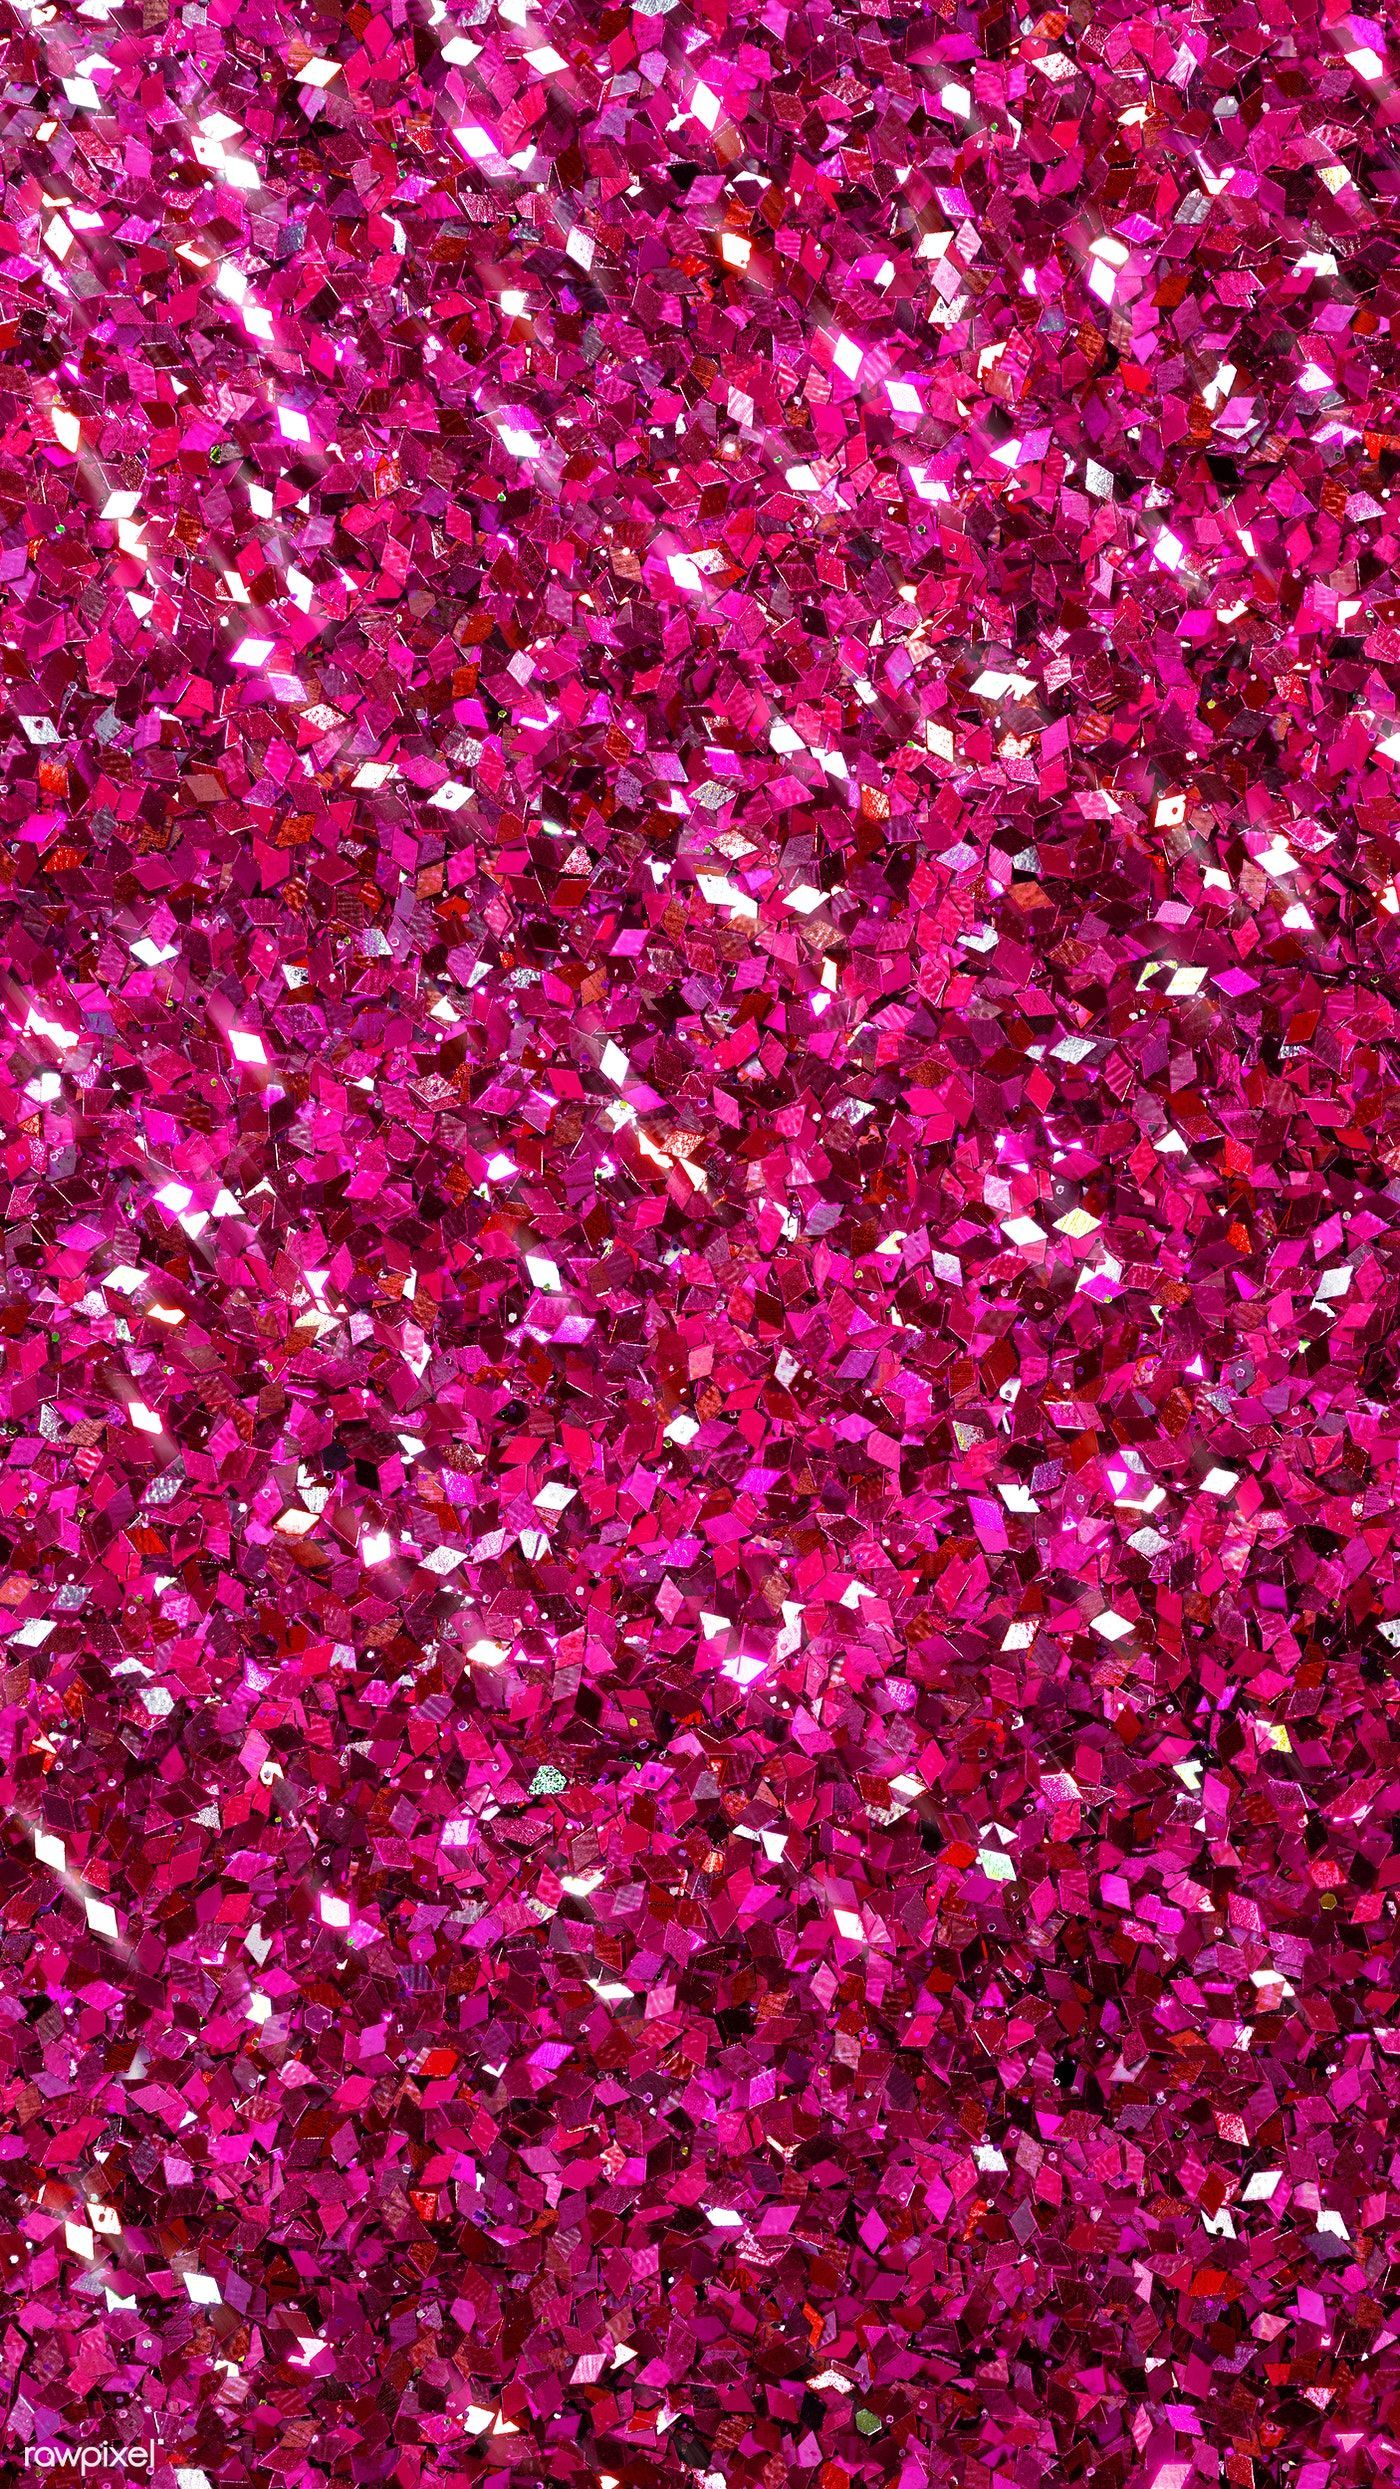 A close up of pink glitter - Magenta